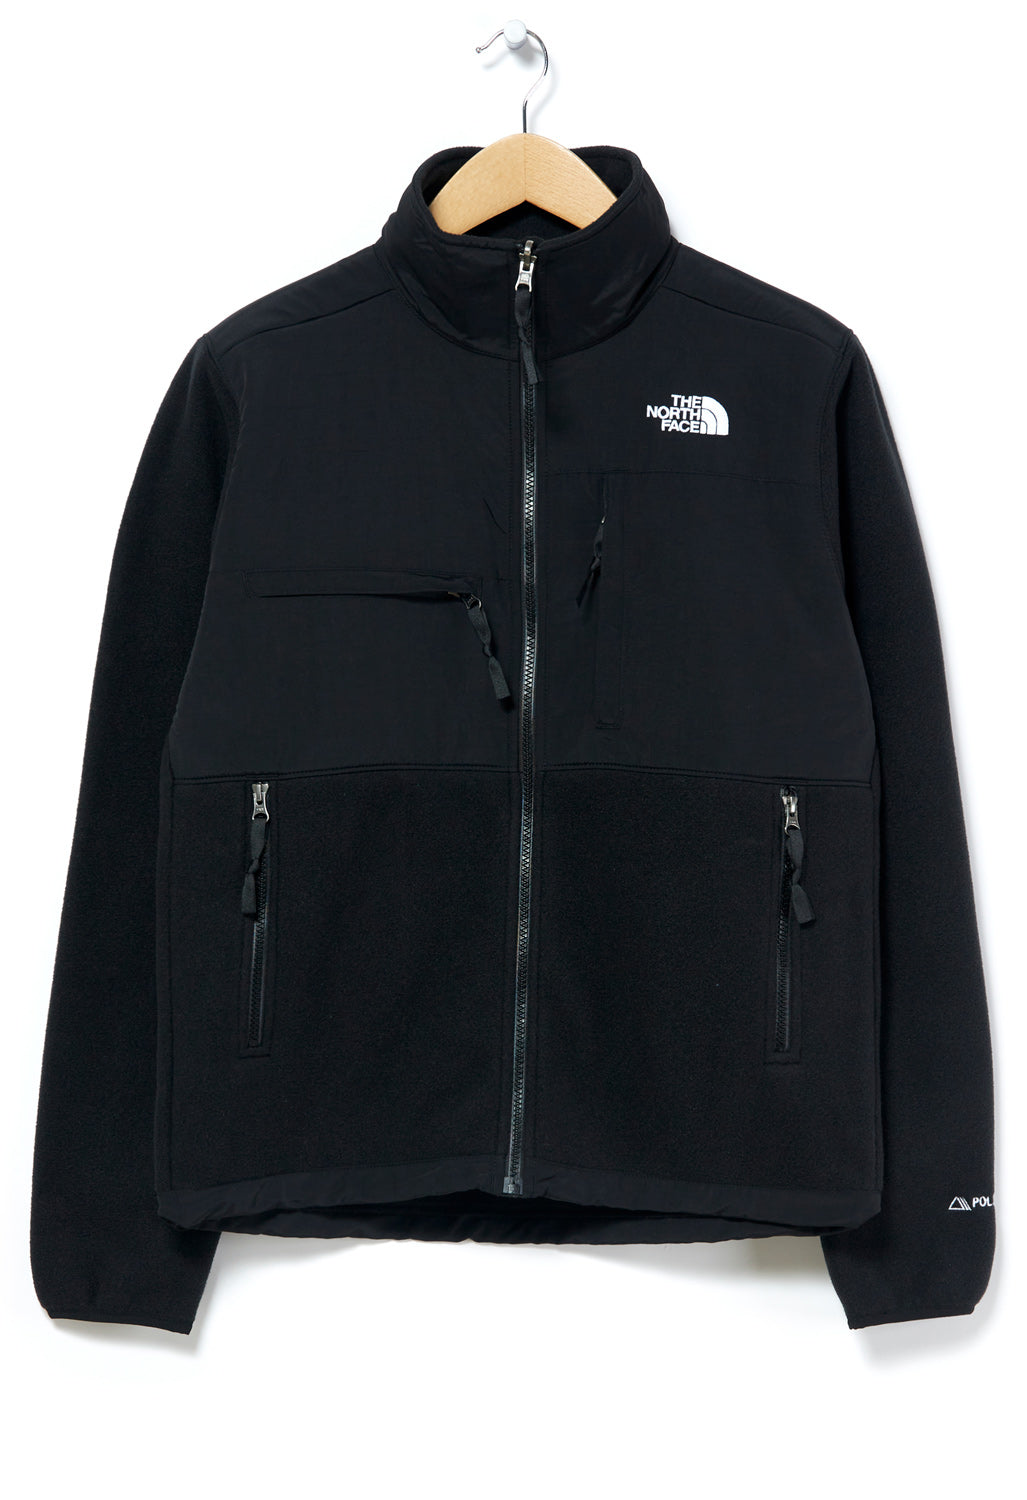 The North Face Denali Men's Jacket - TNF Black – Outsiders Store UK